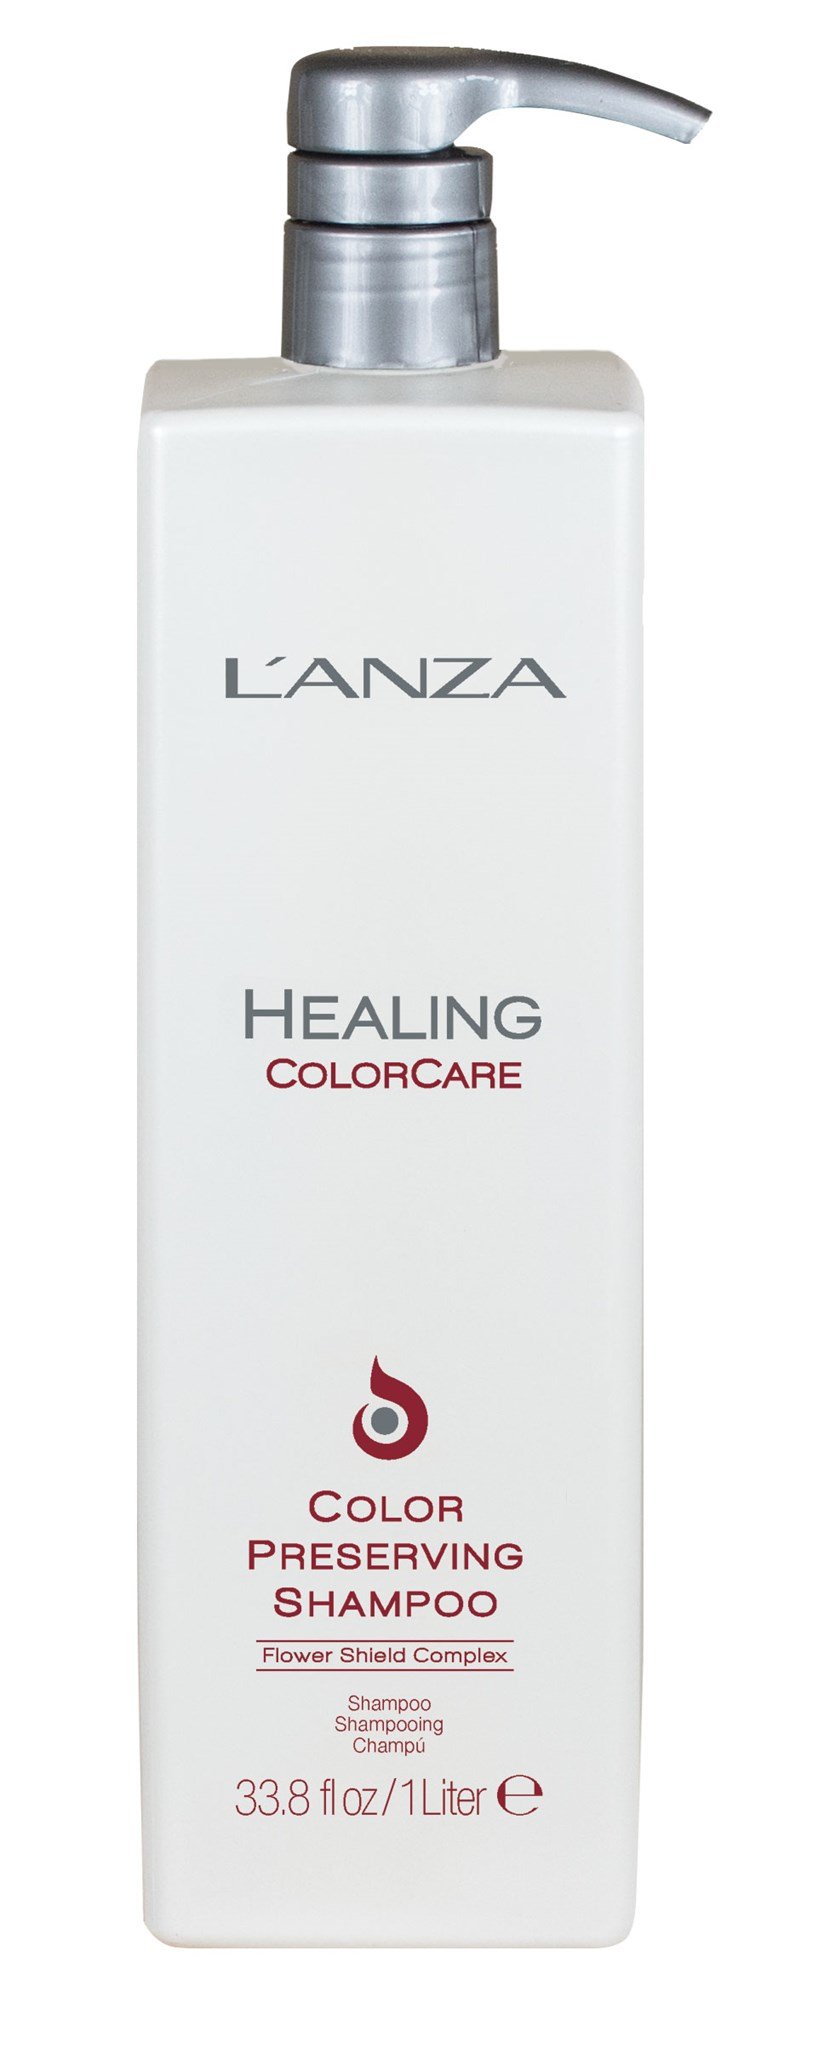 Lanza Healing ColorCare Color-Preserving Shampoo Ltr